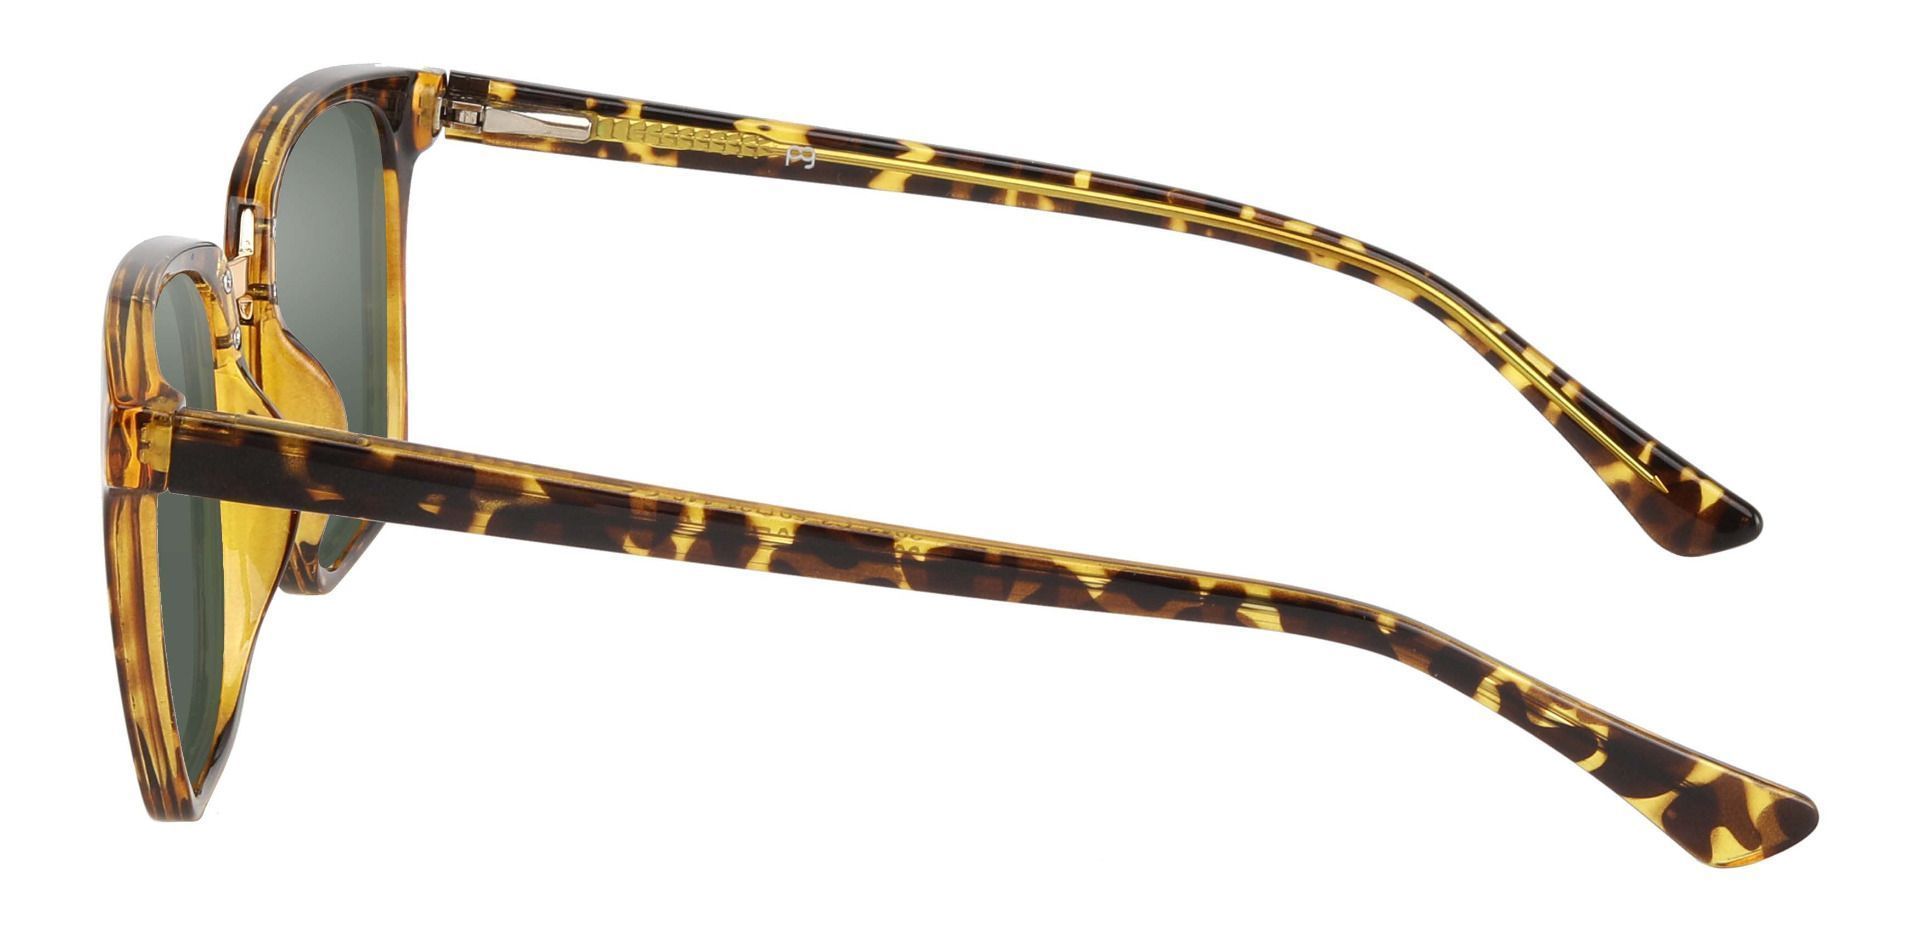 Delta Square Prescription Sunglasses - Tortoise Frame With Green Lenses